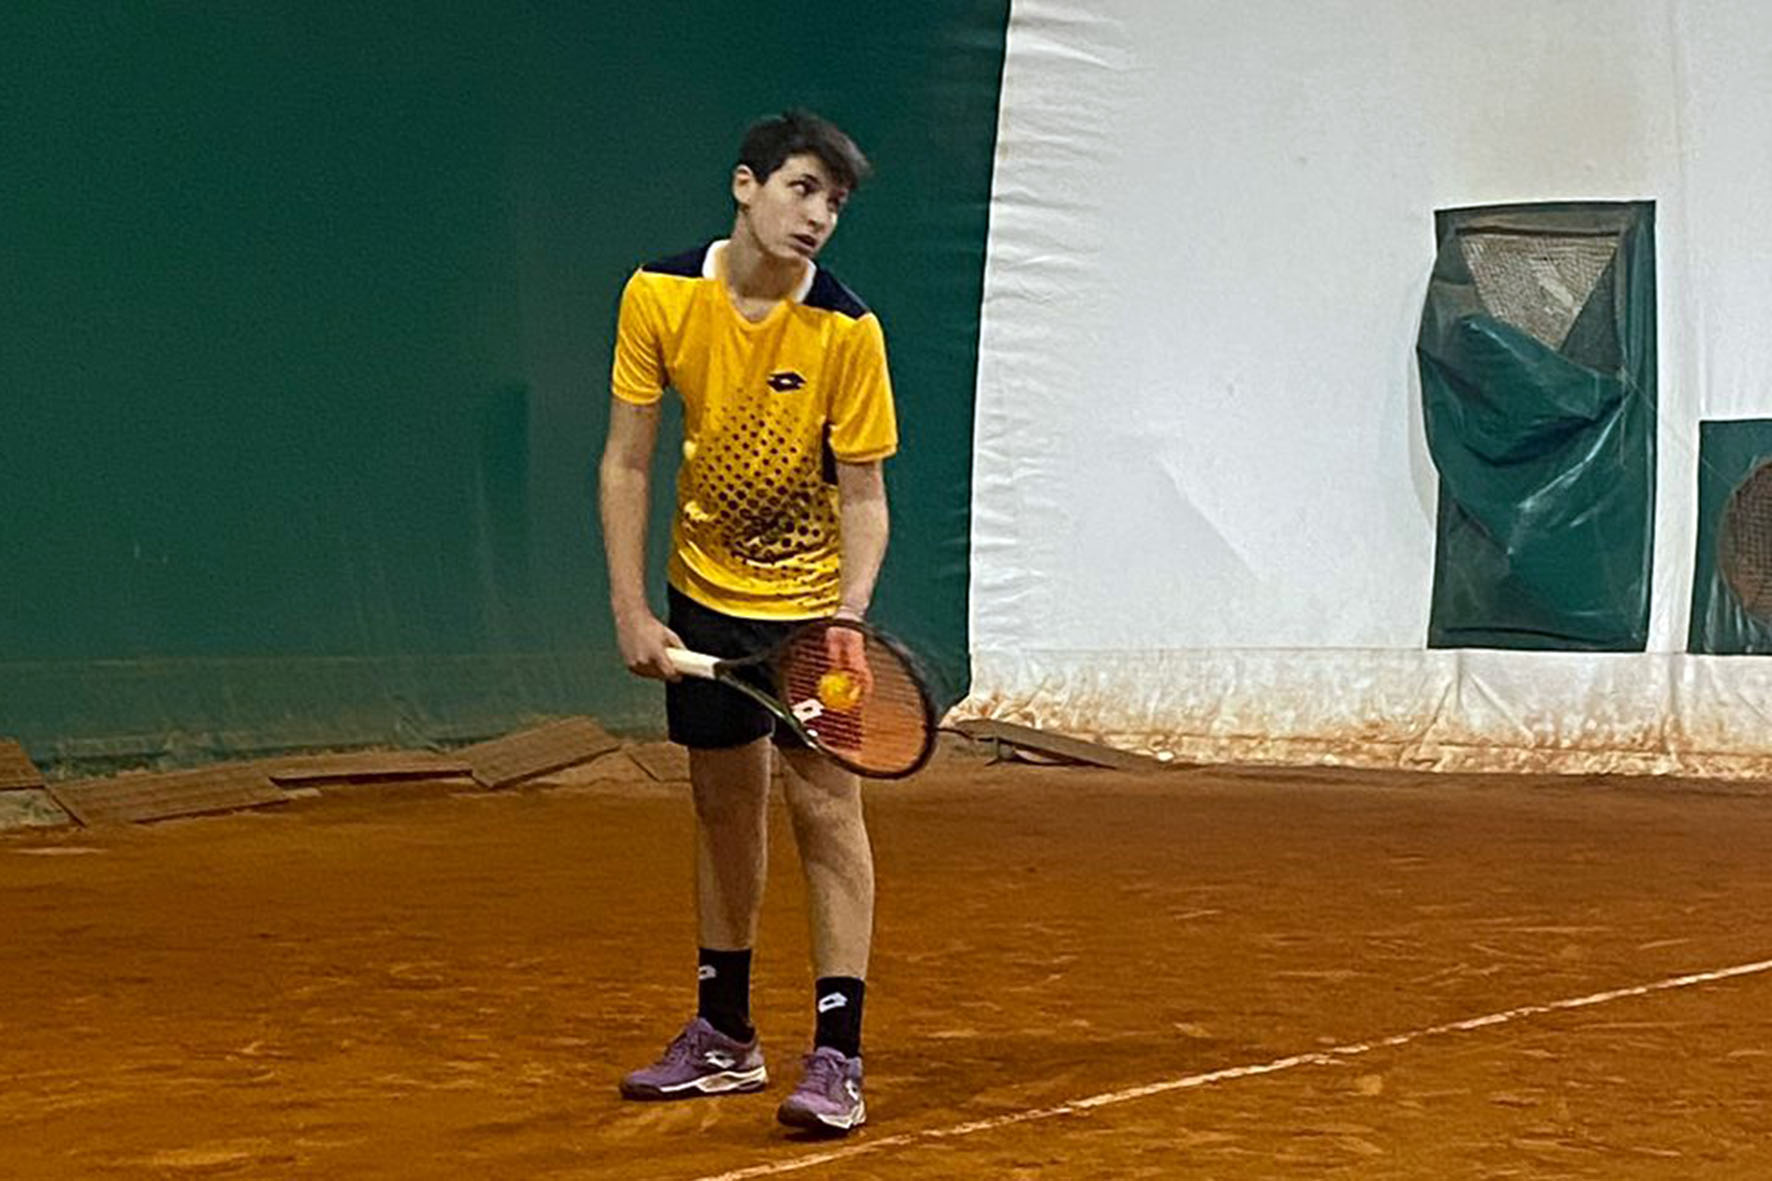 Tennis Giotto - Raffaele Ciurnelli, Junior Next Gen Italia 2022